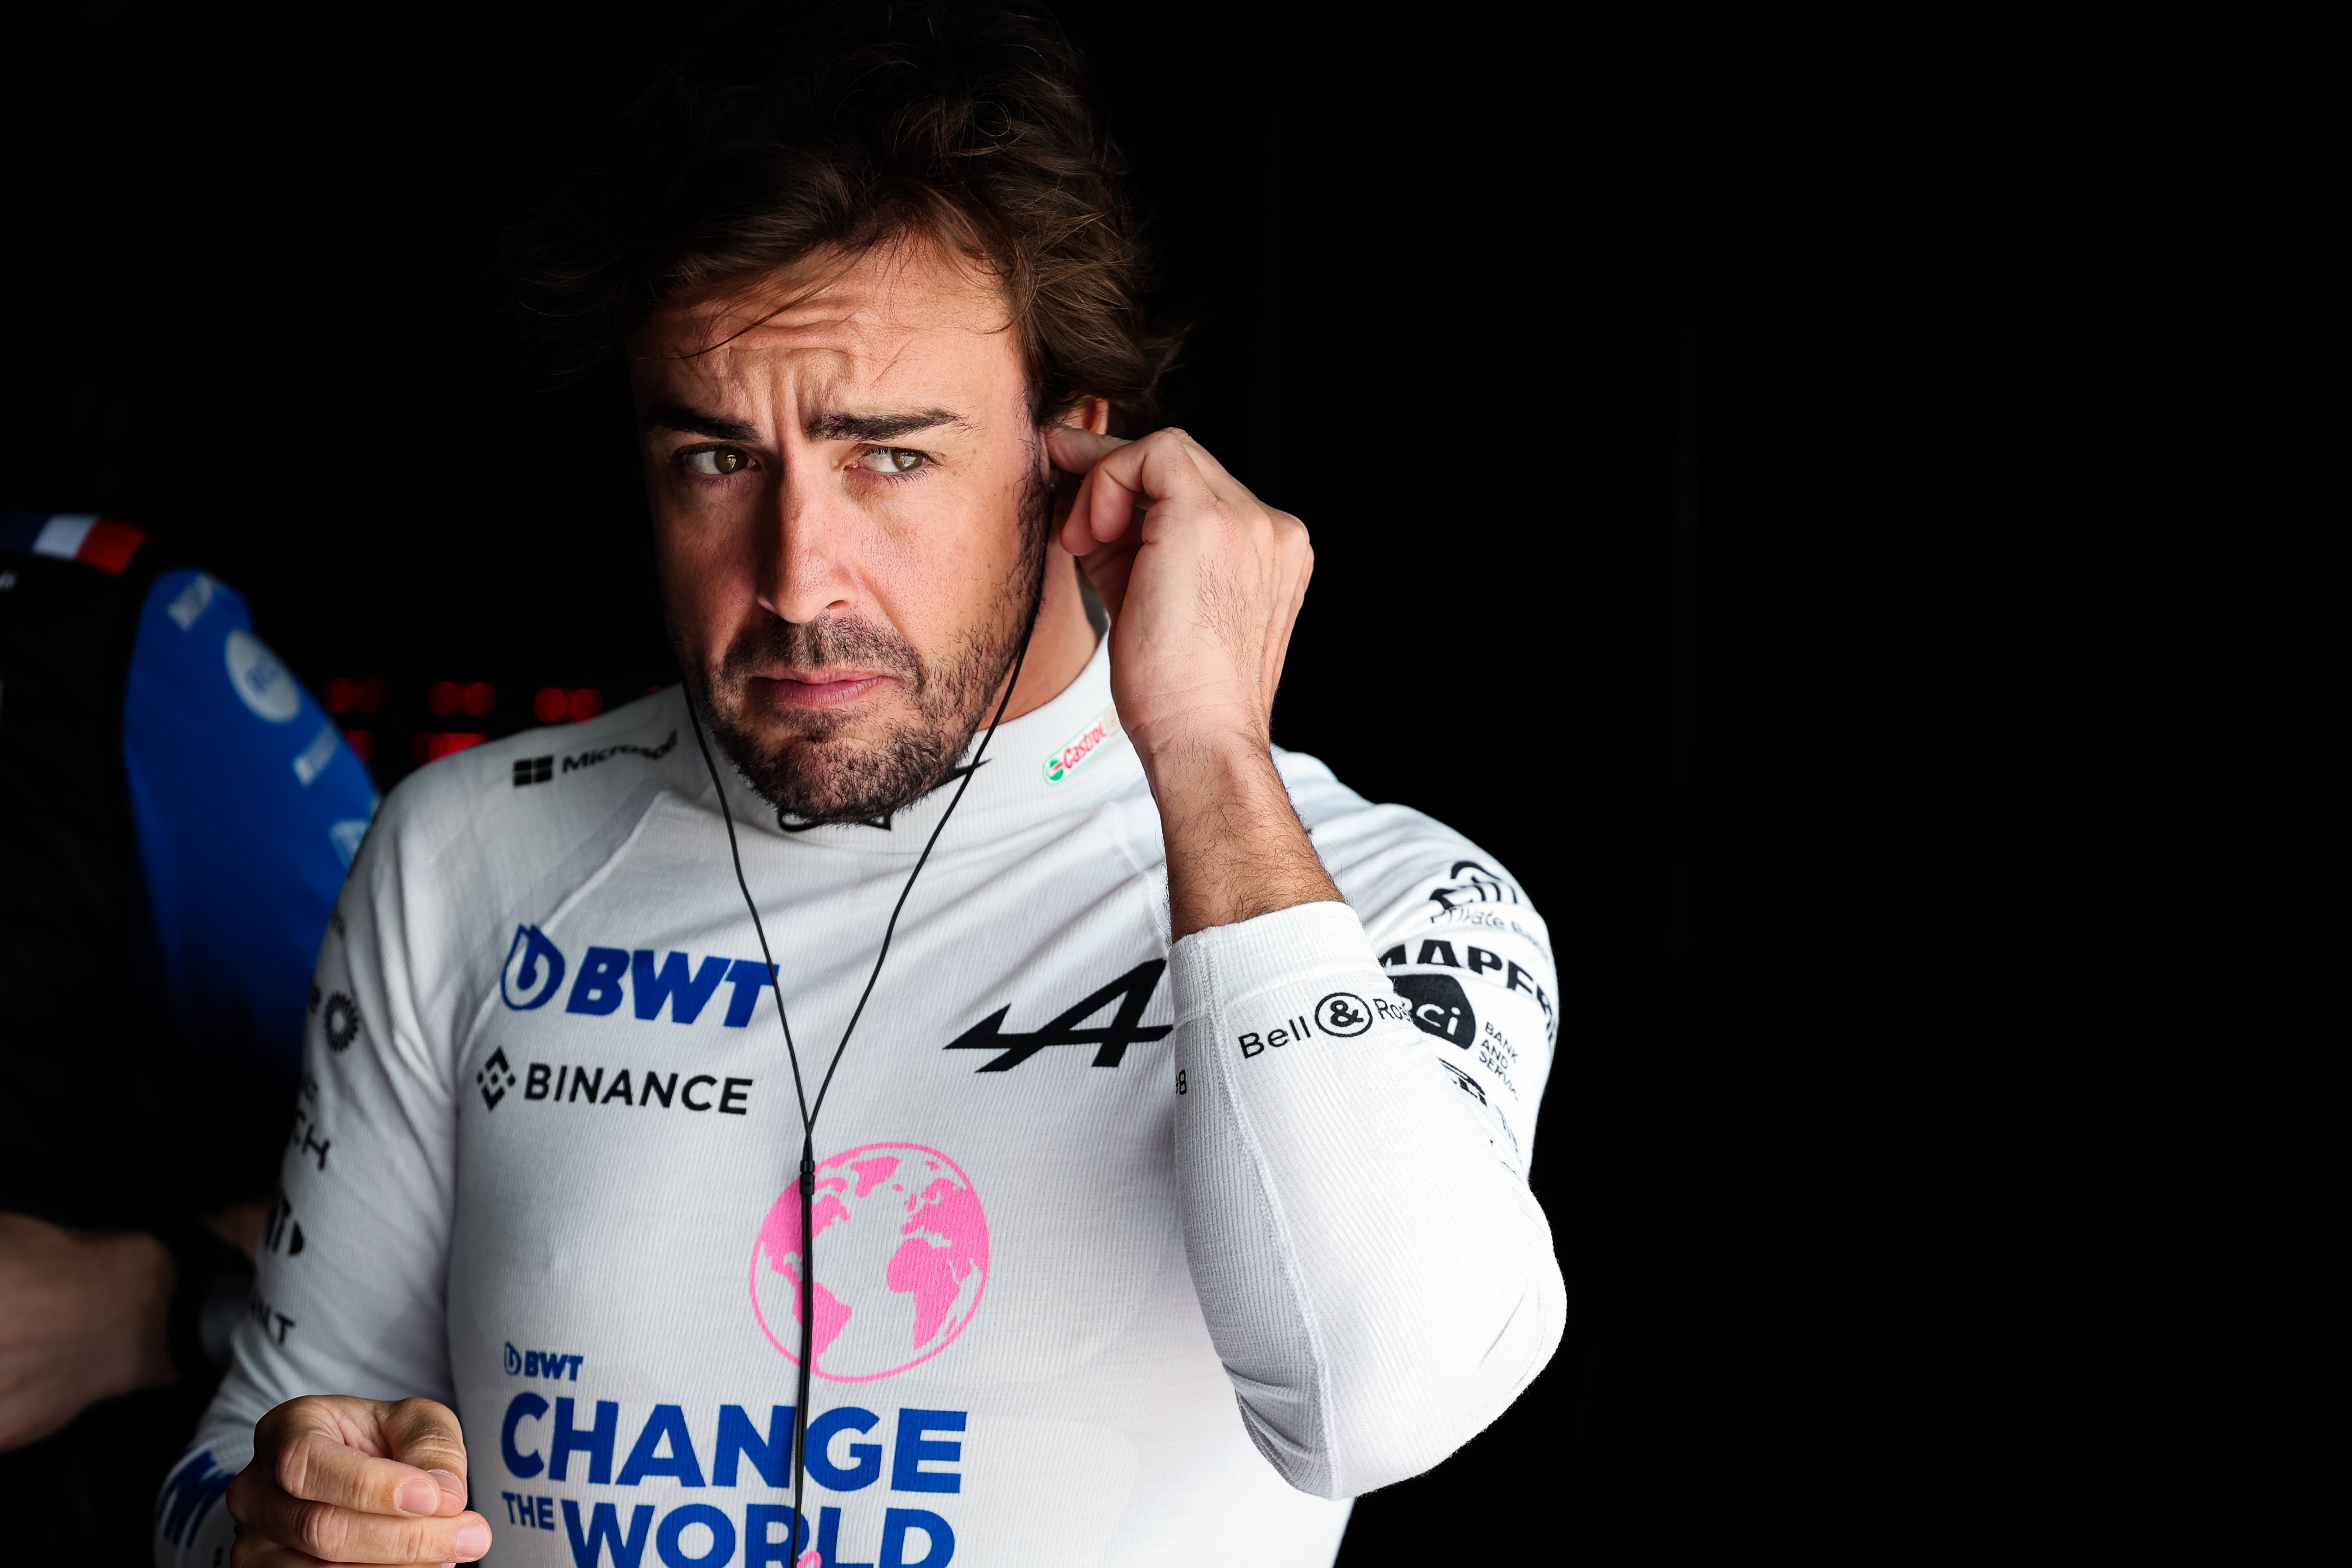 Bomba a la Fórmula 1: Fernando Alonso deixa Alpine per substituir Vettel a Aston Martin